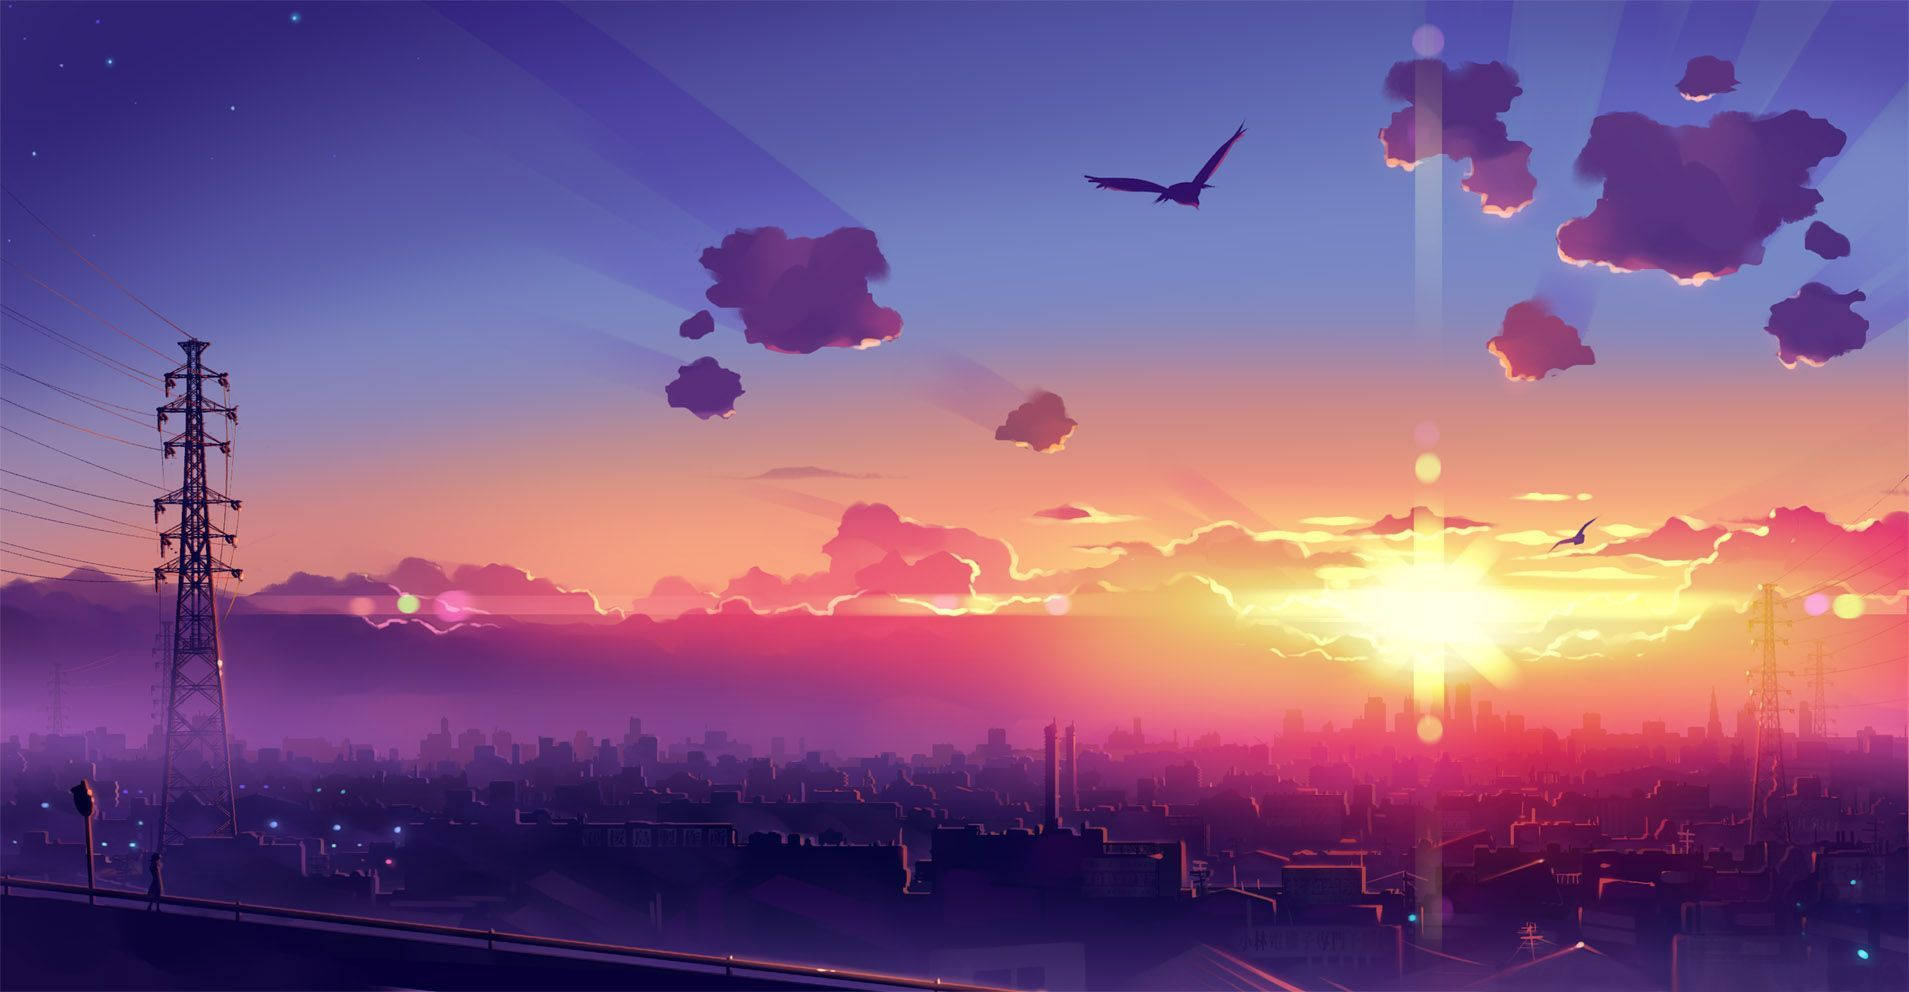 Beautiful Sunset Anime Scenery Background